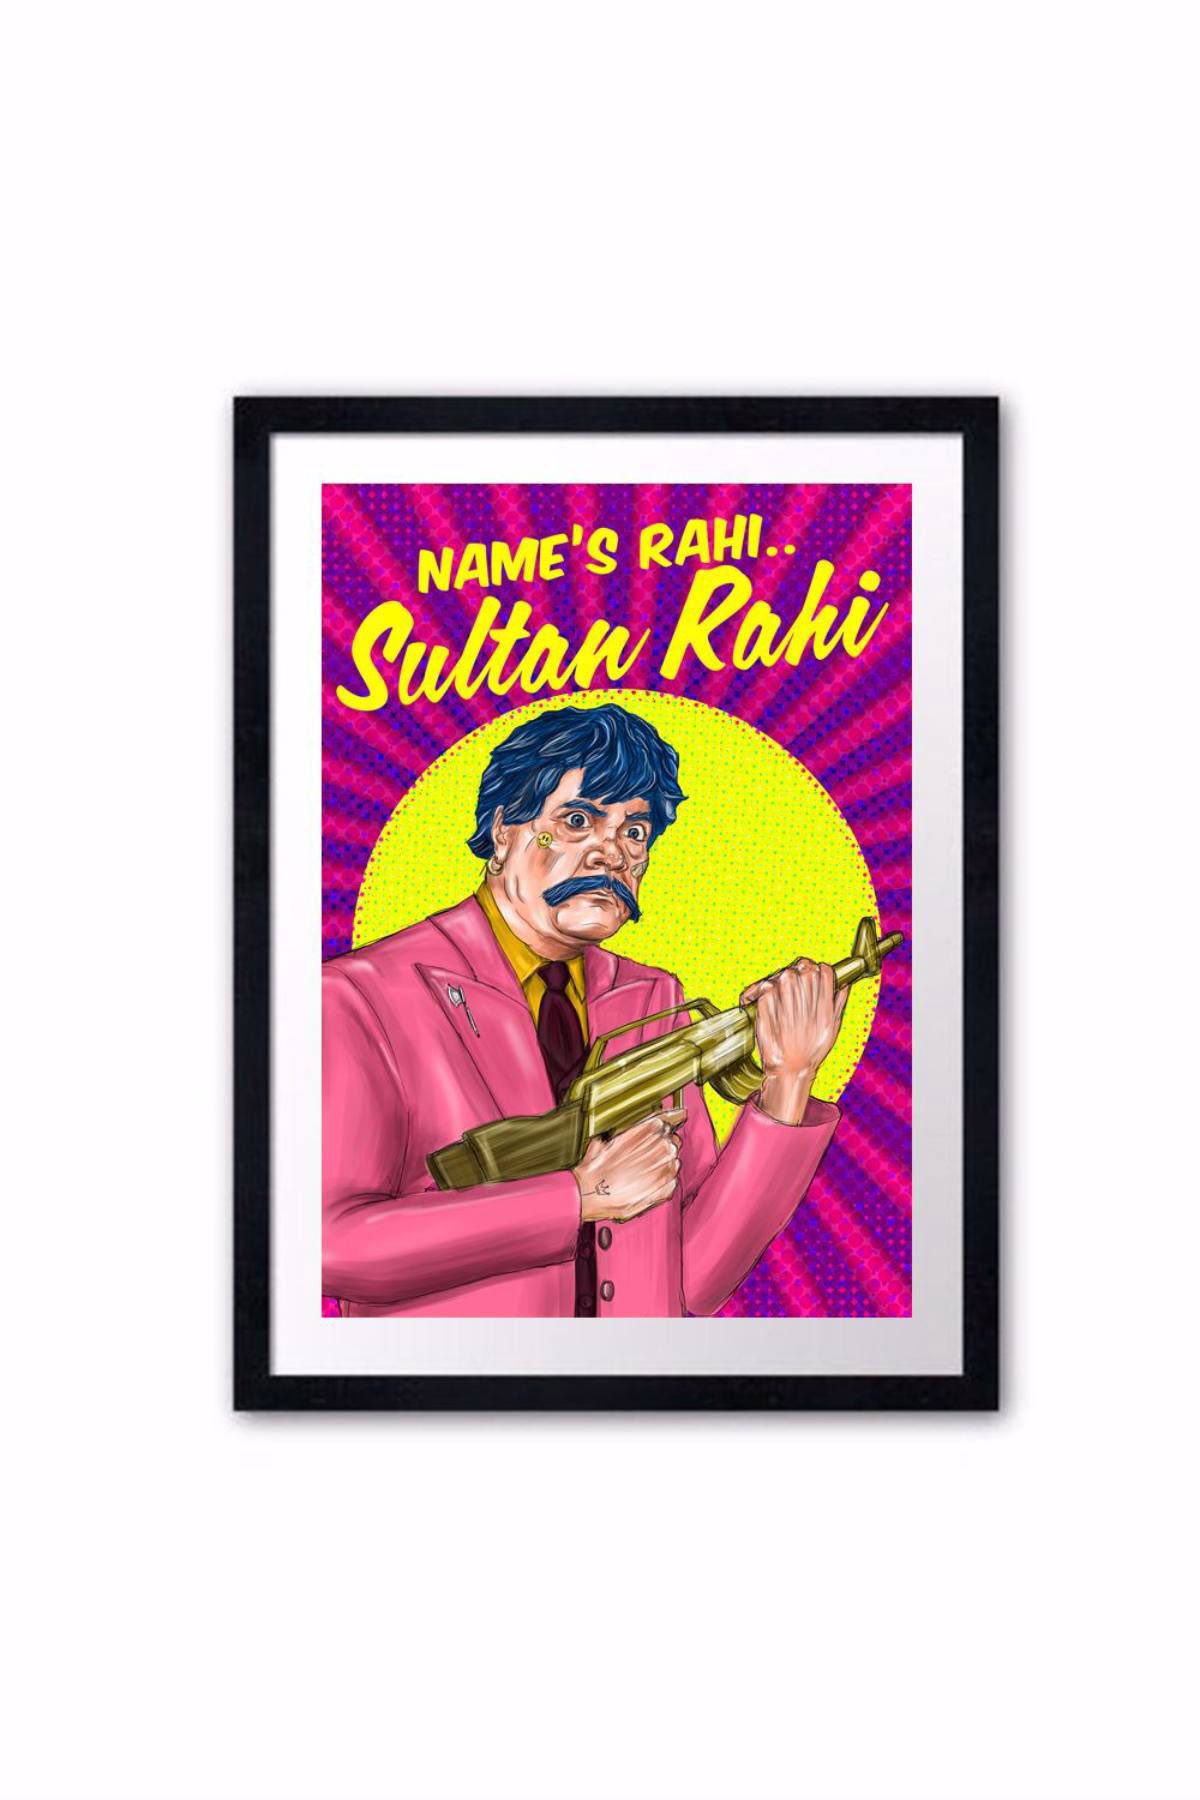 Names Rahi - Sultan Rahi Poster